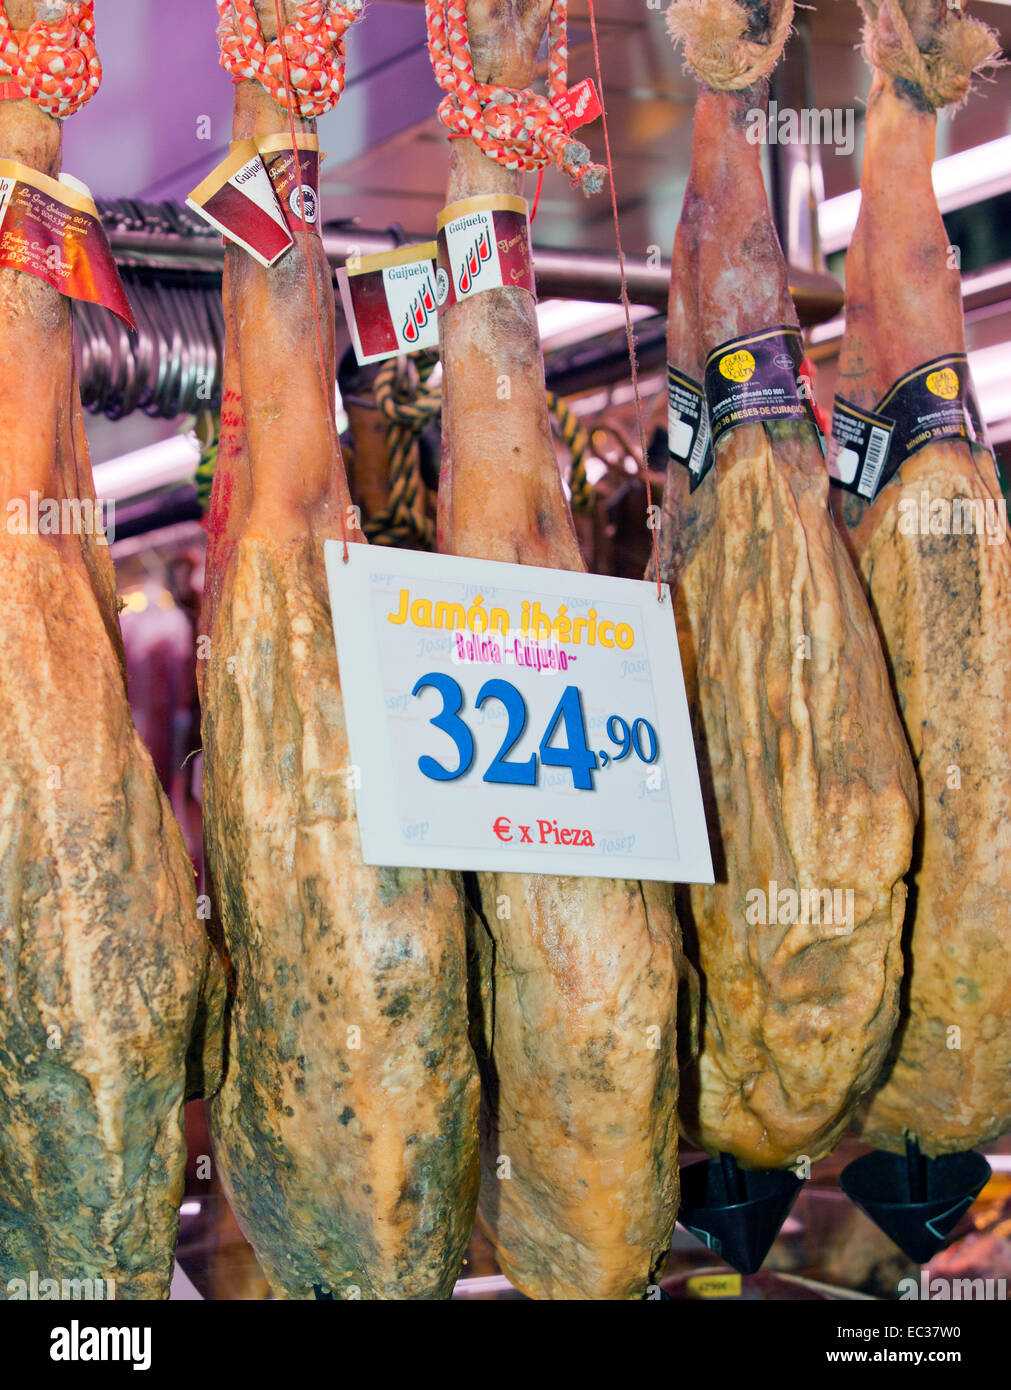 Serrano ham, Jamon Iberico Bellota, Mercat de la Boqueria market hall, Barcelona, Spain Stock Photo